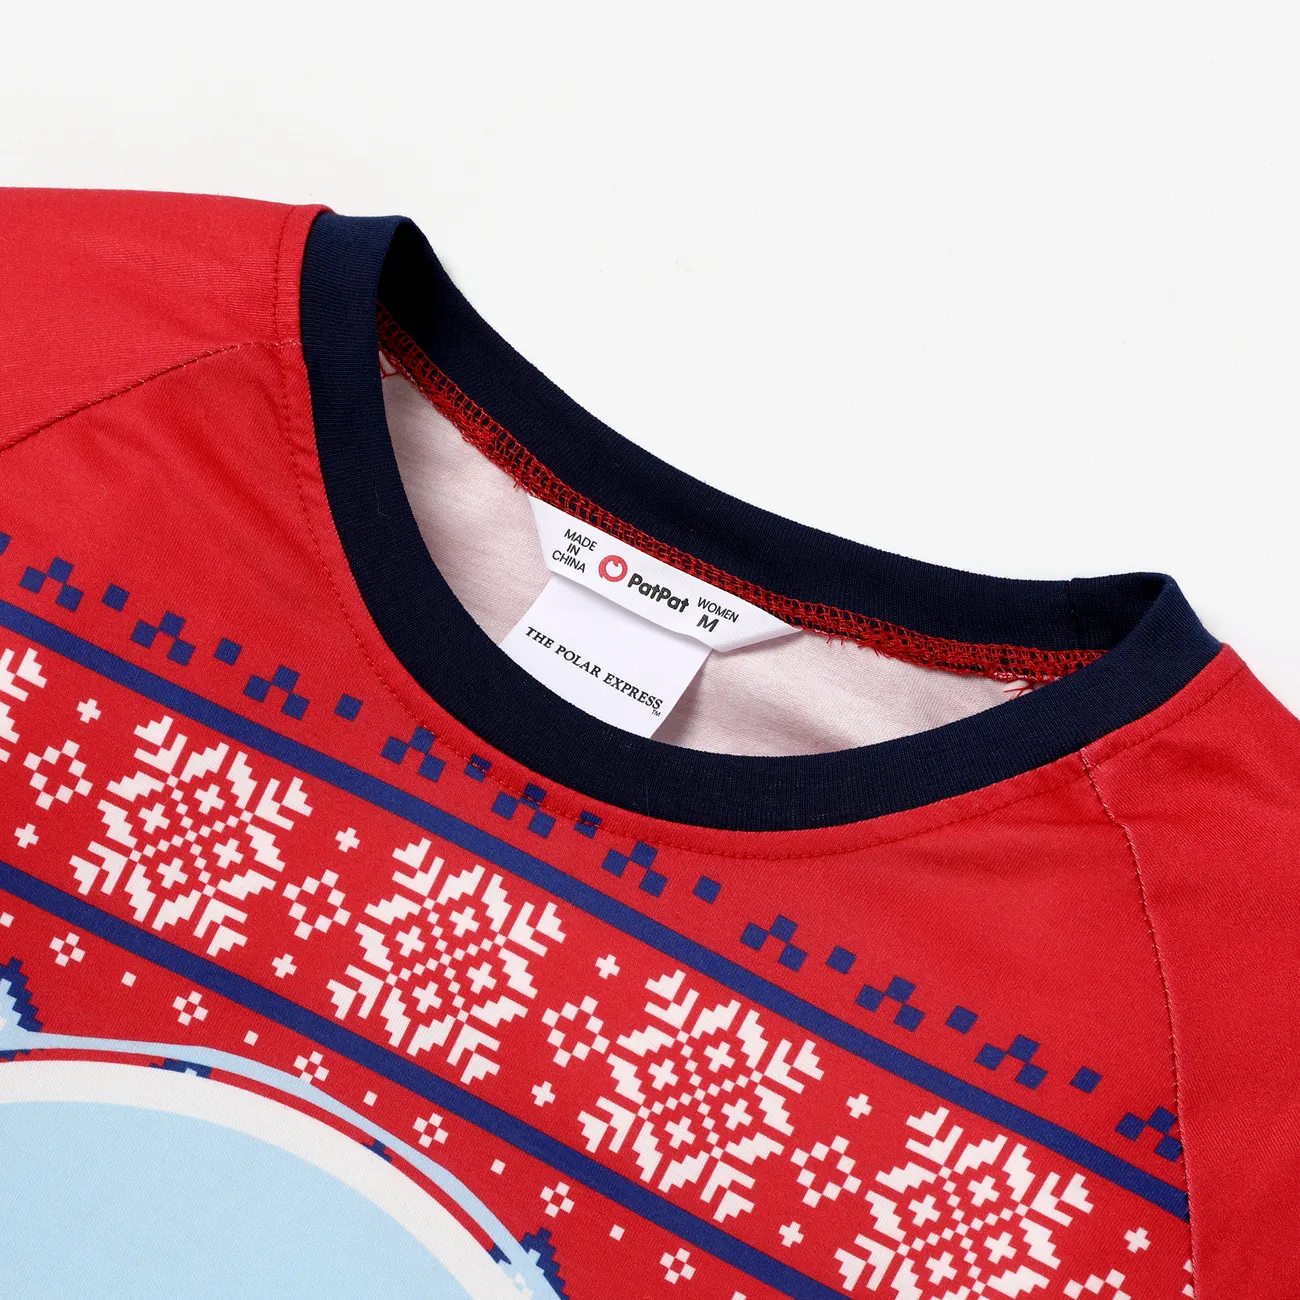 The Polar Express Weihnachten Familien-Looks Langärmelig Familien-Outfits Pyjamas (Flame Resistant) Mehrfarbig big image 1